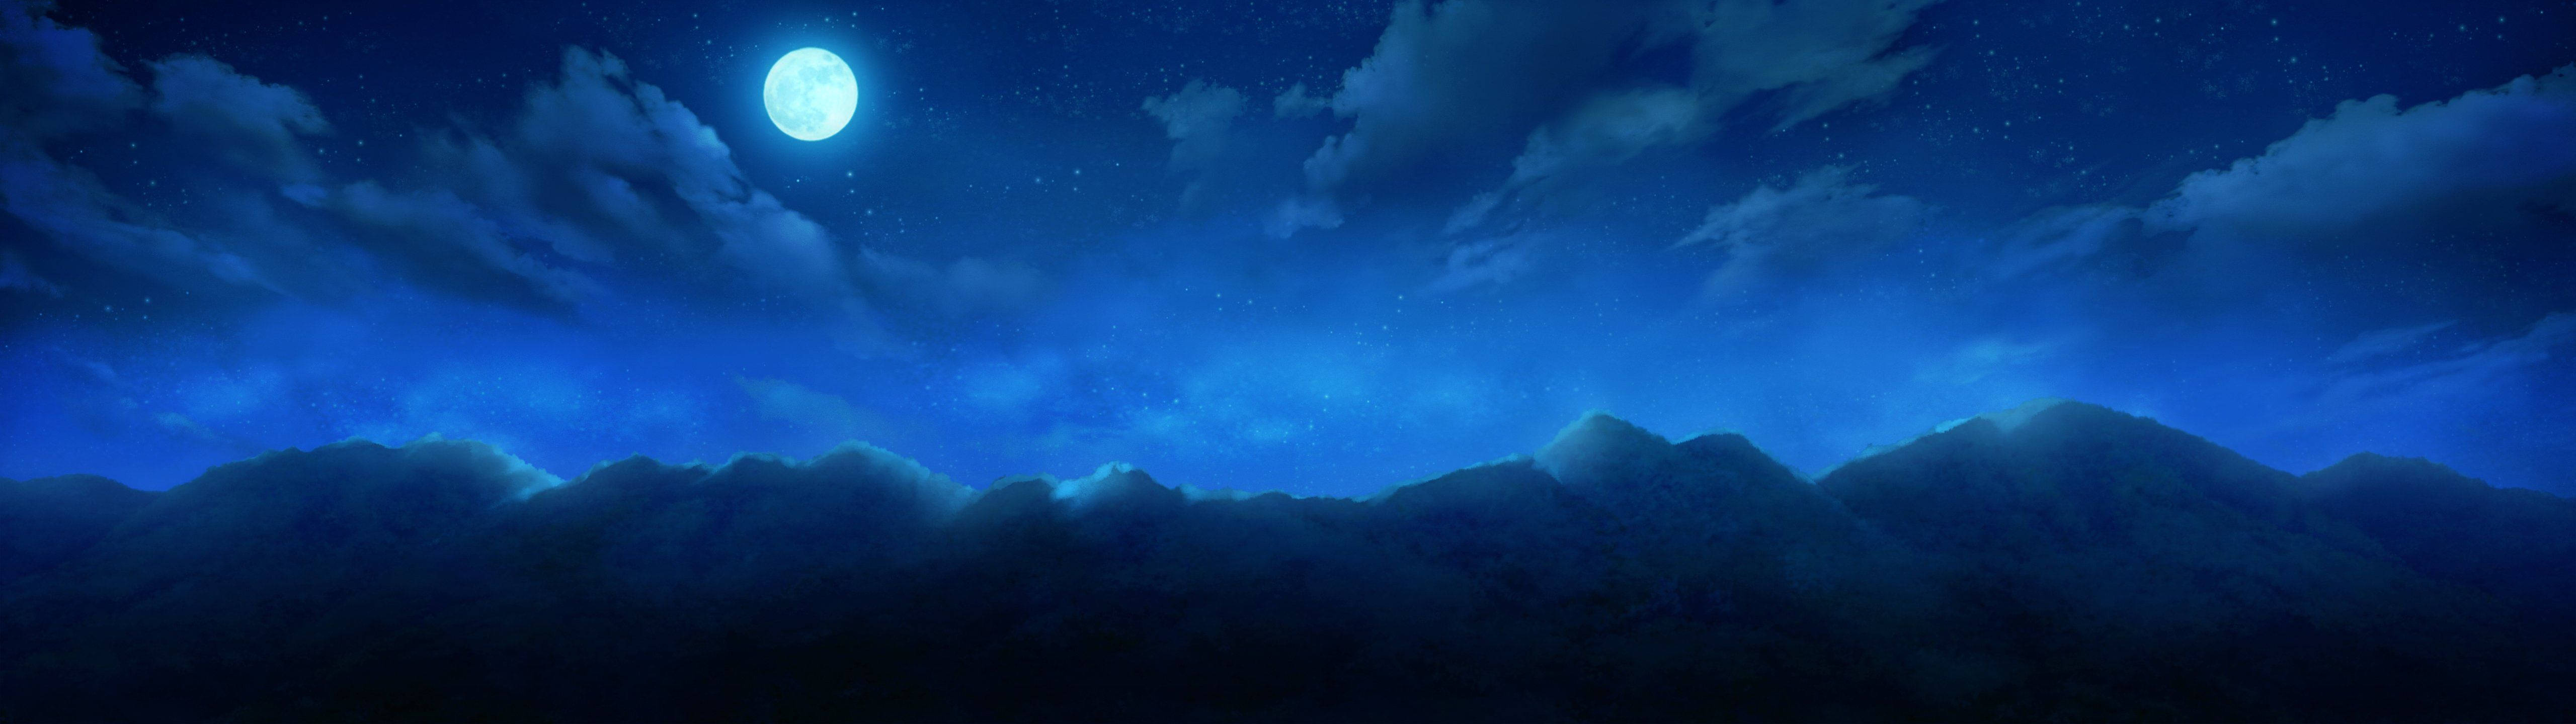 A Bright Full Moon Shining In A Blue Night Sky Wallpaper